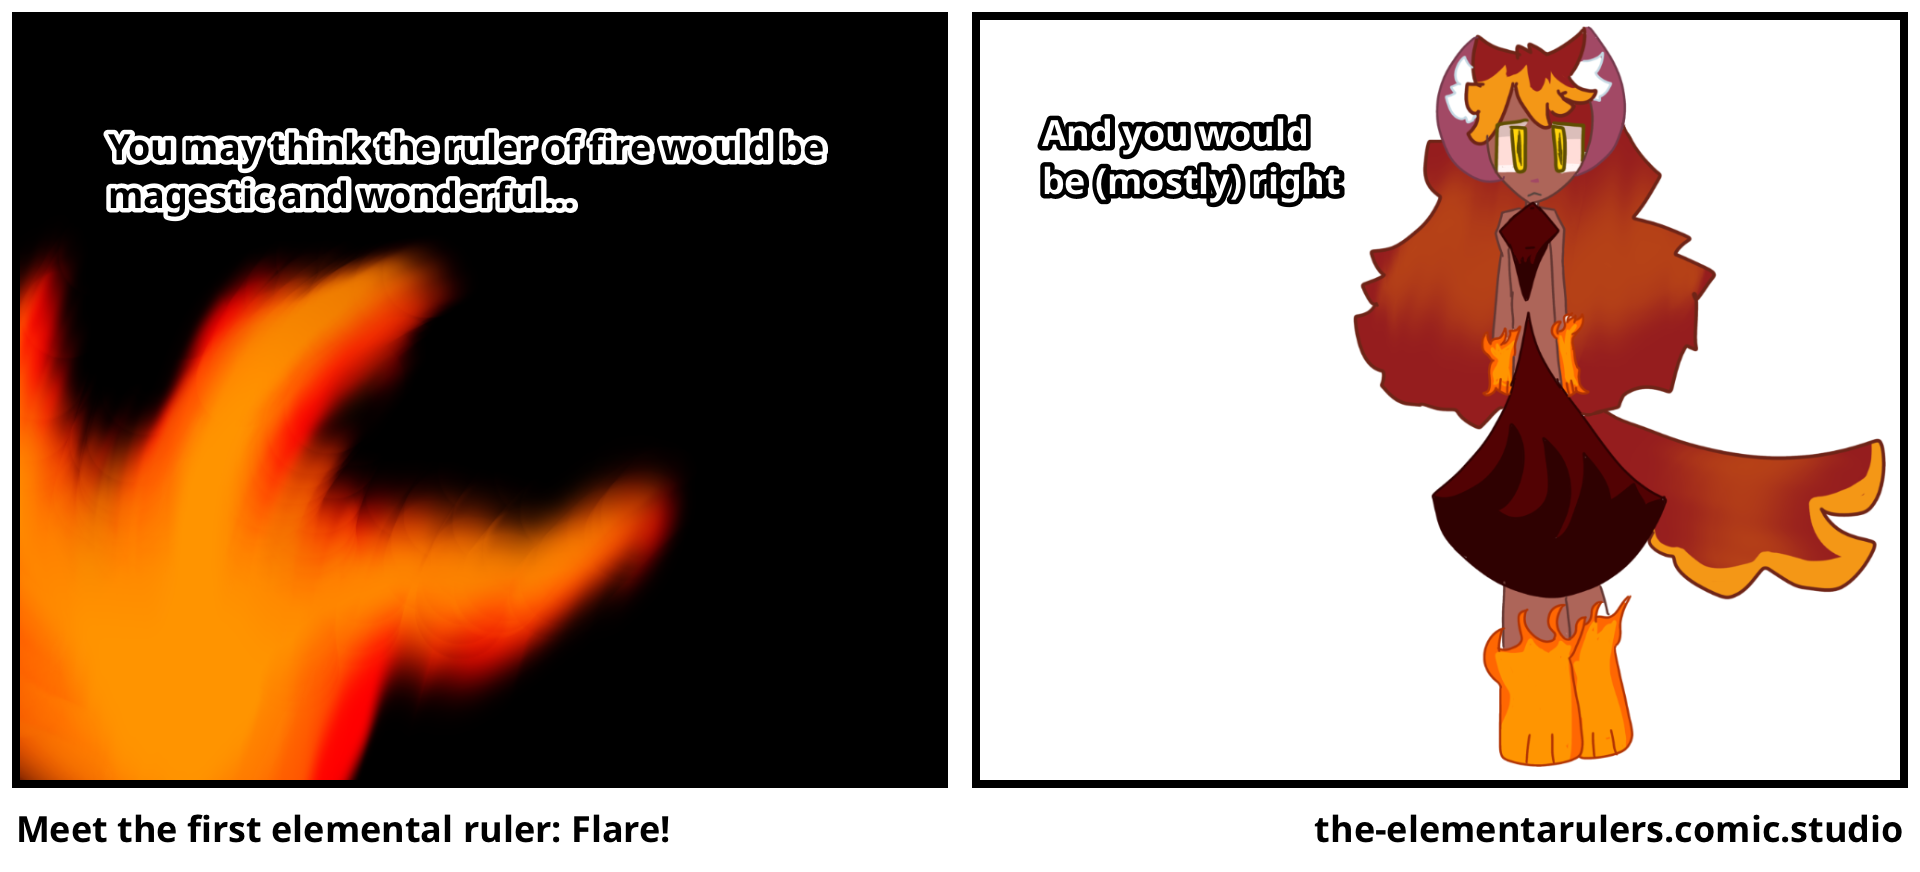 Meet the first elemental ruler: Flare!